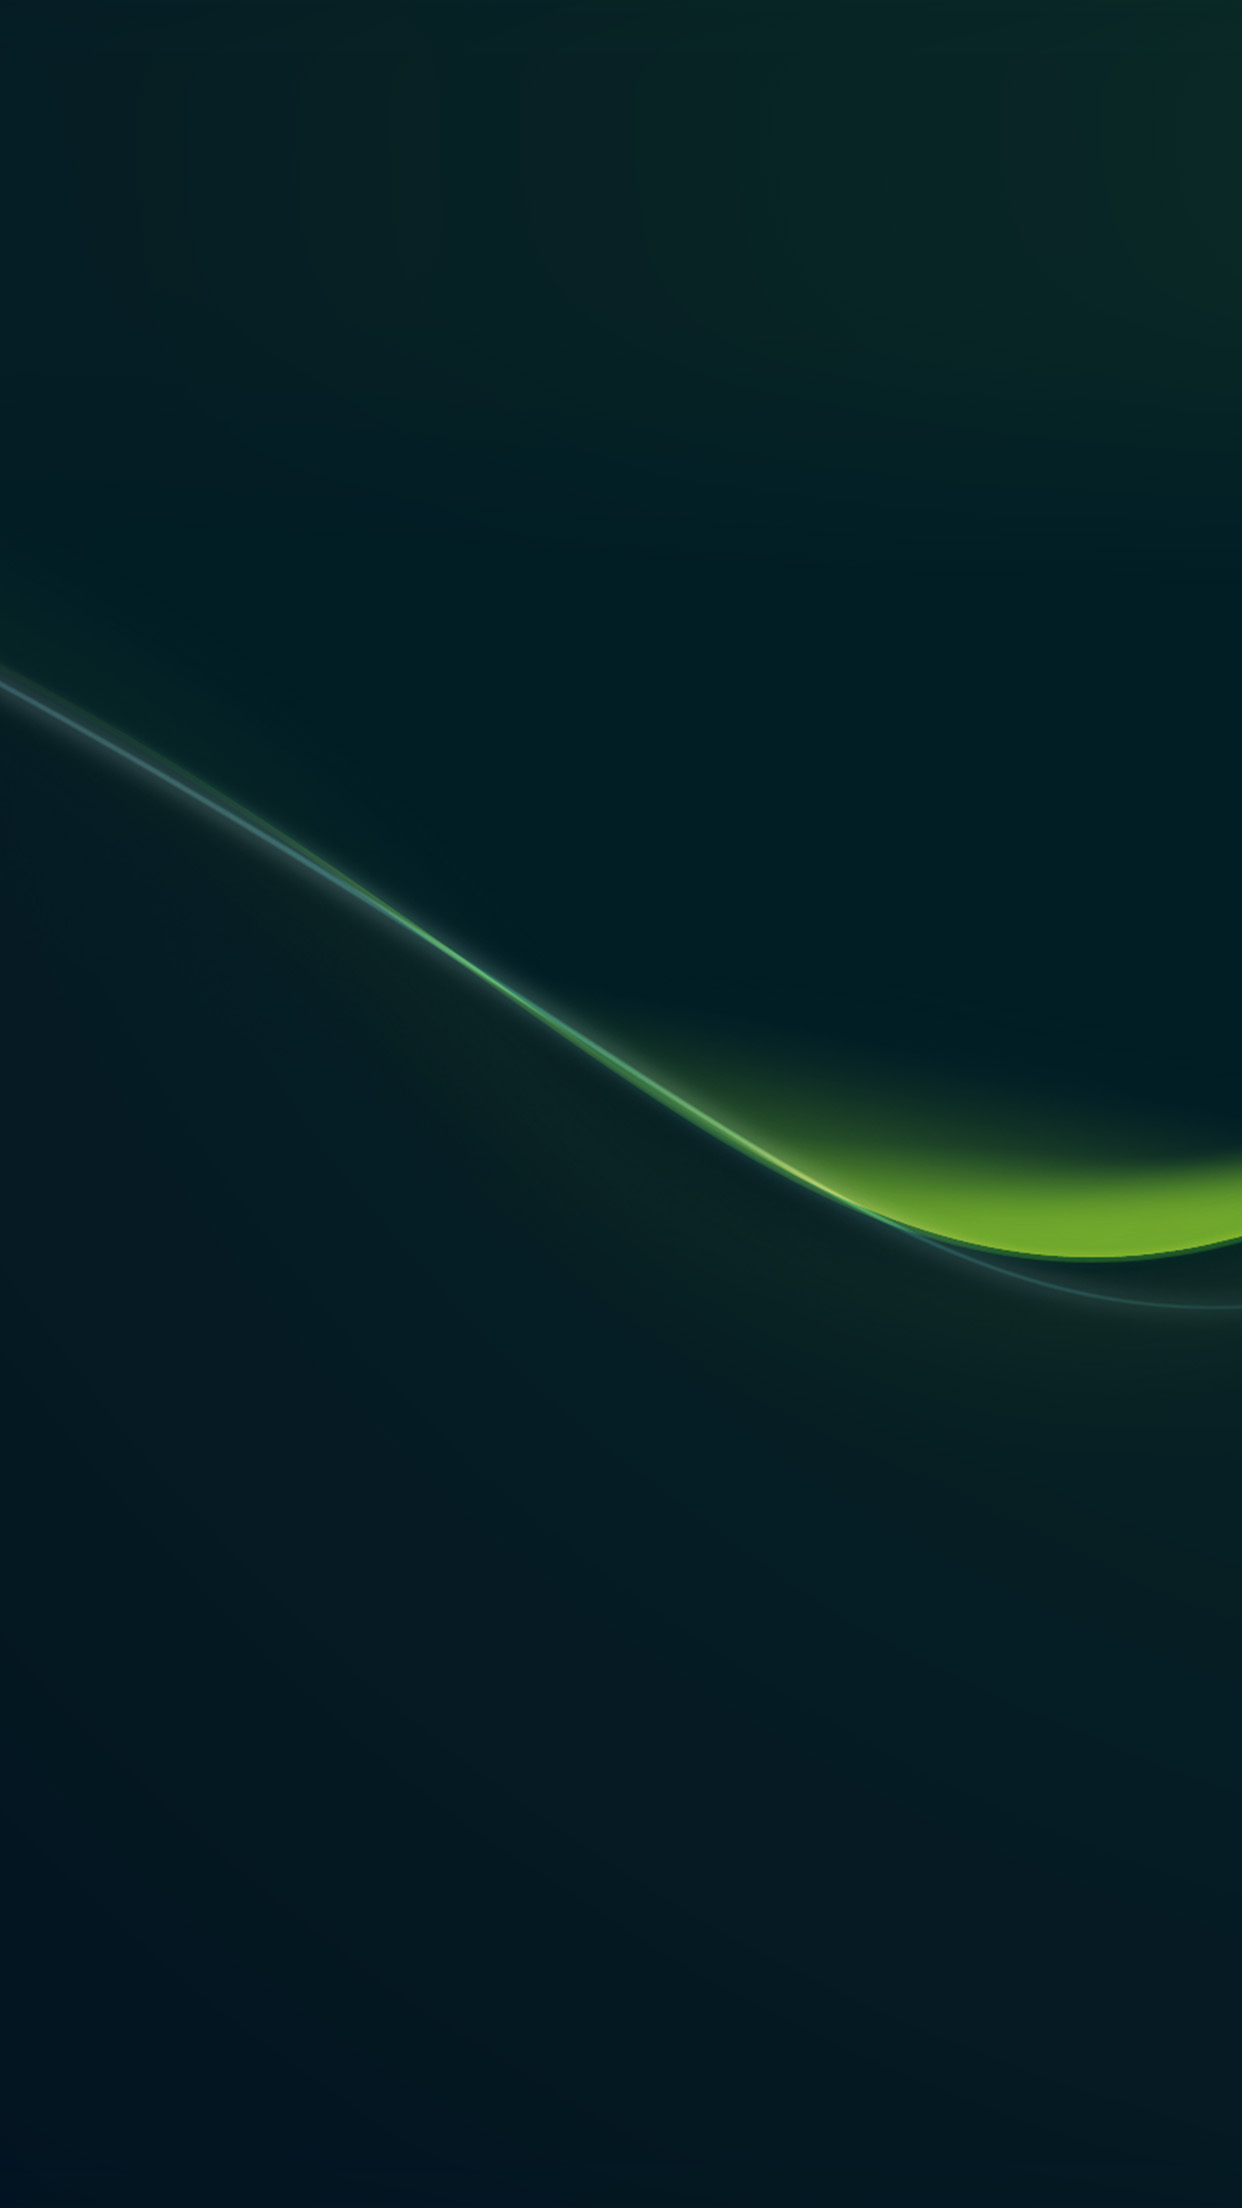 Green Line Dark Art Abstract Pattern Android wallpaper